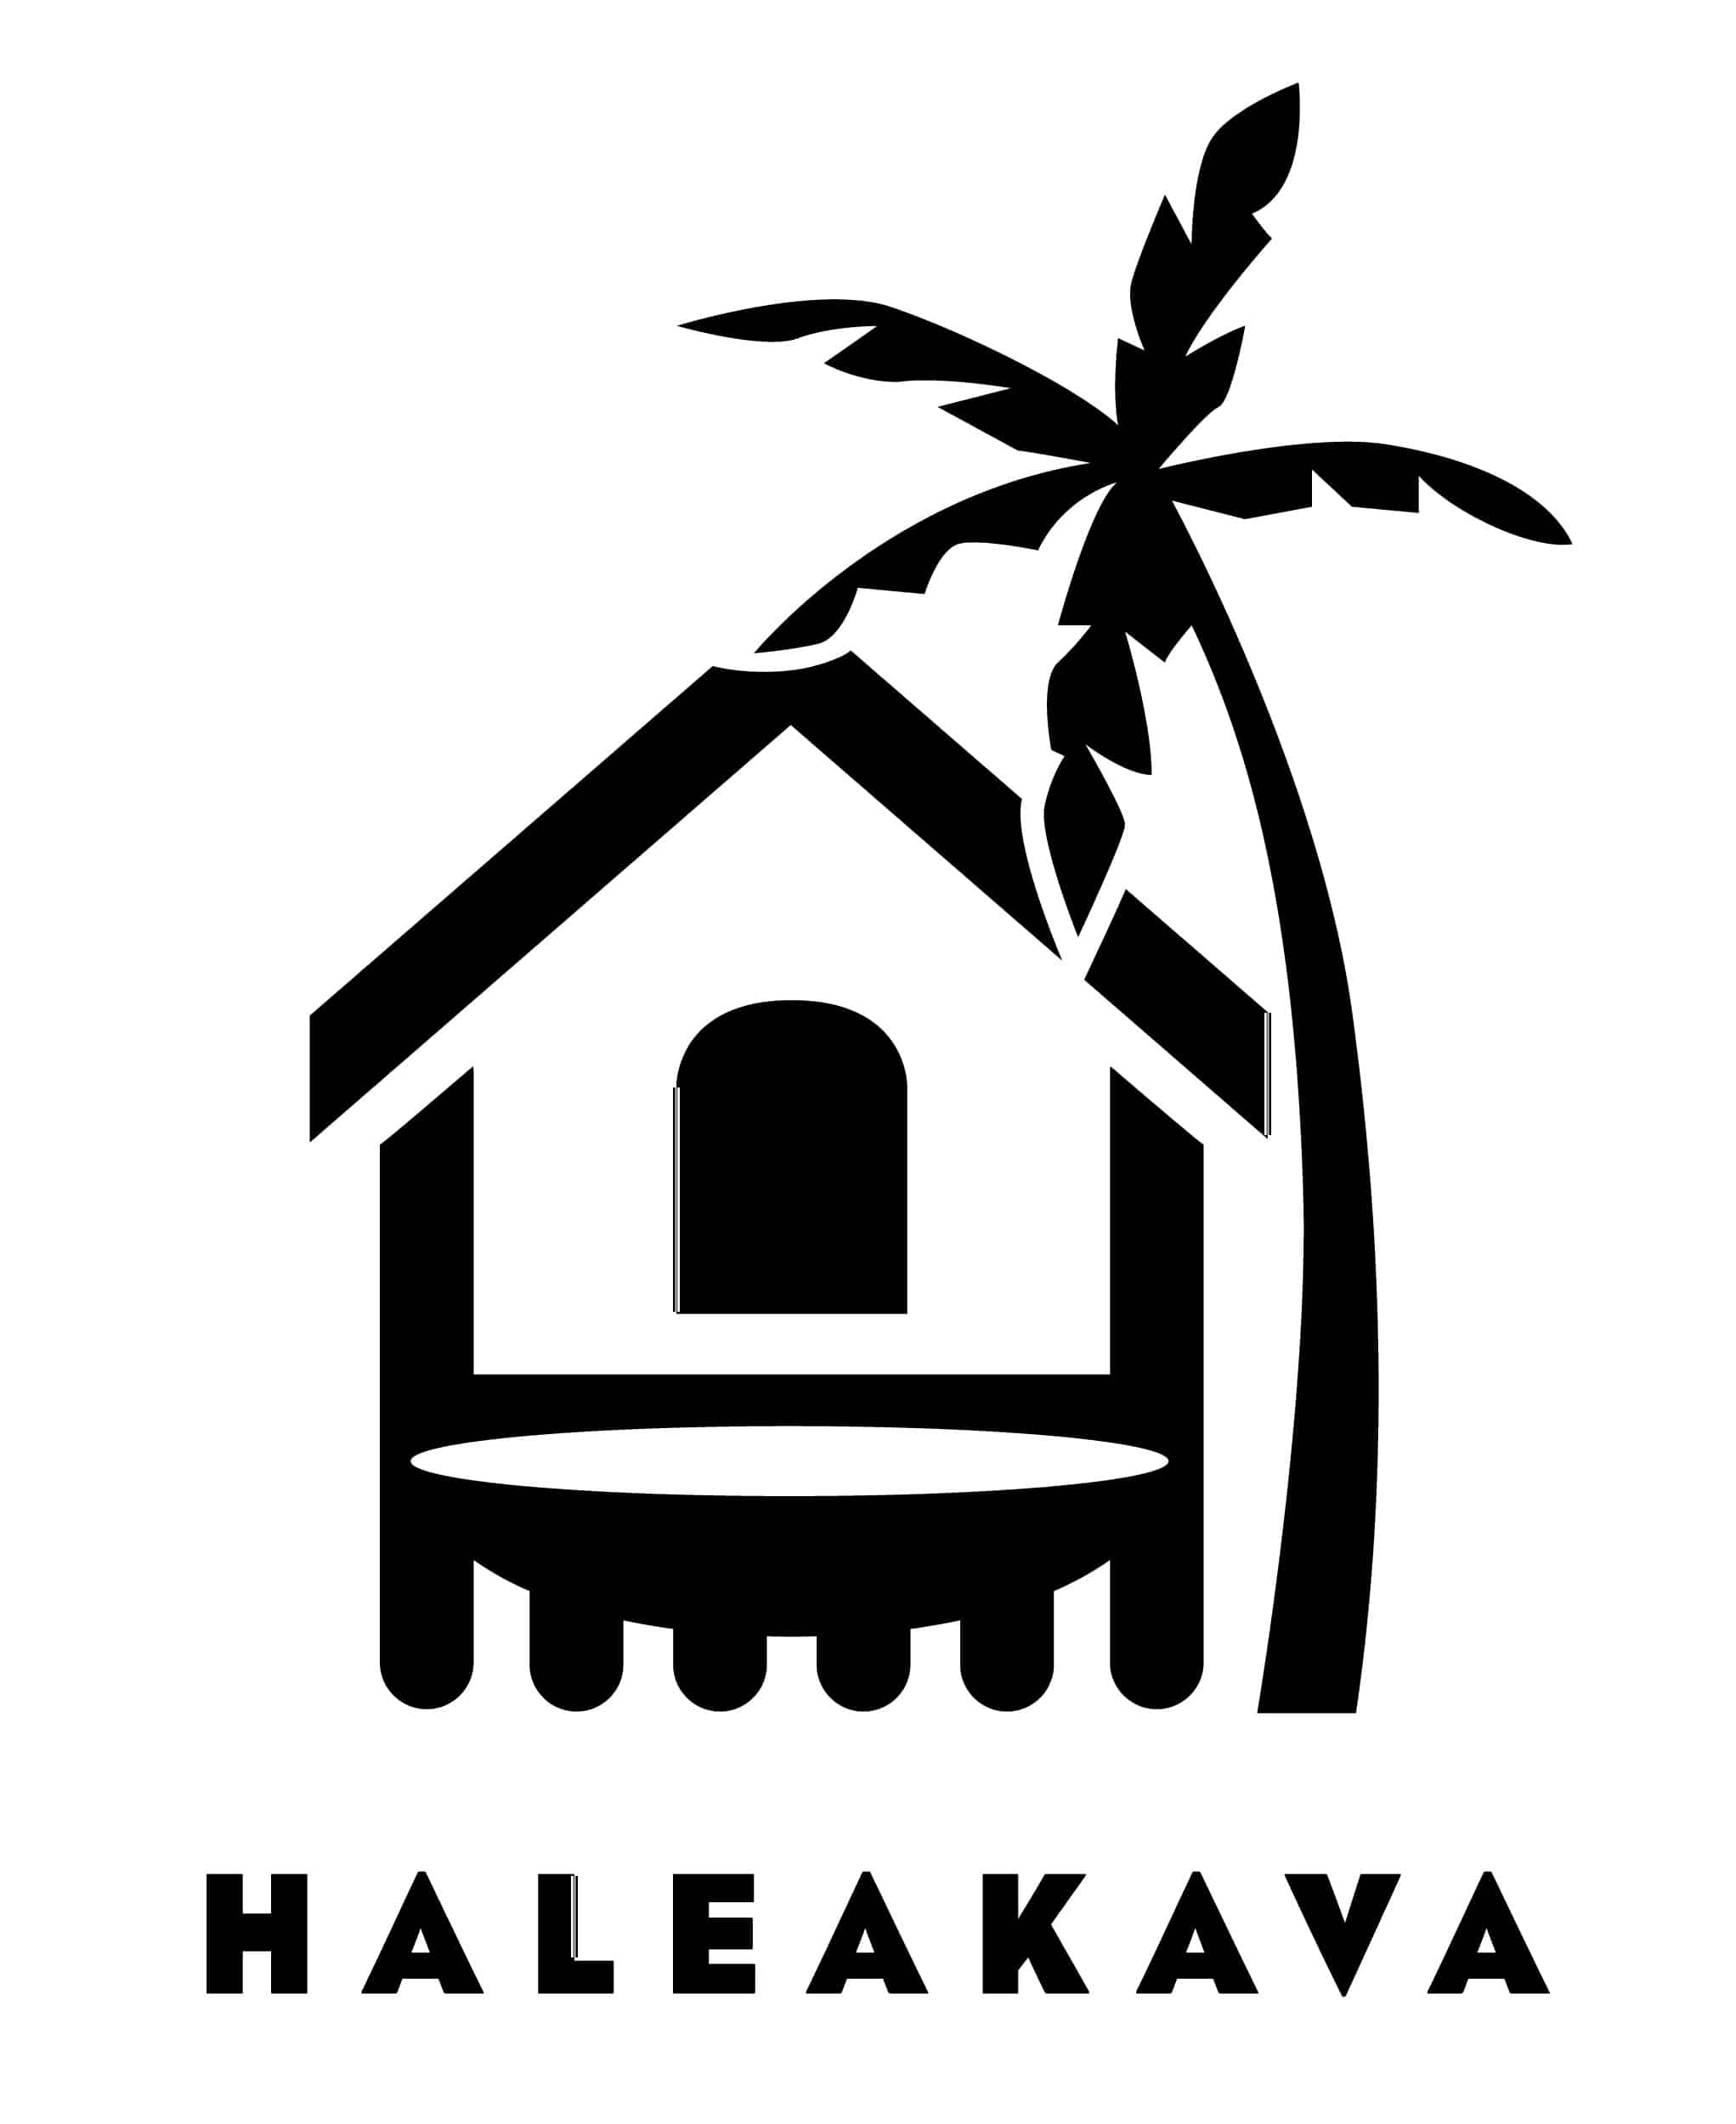 Haleakava